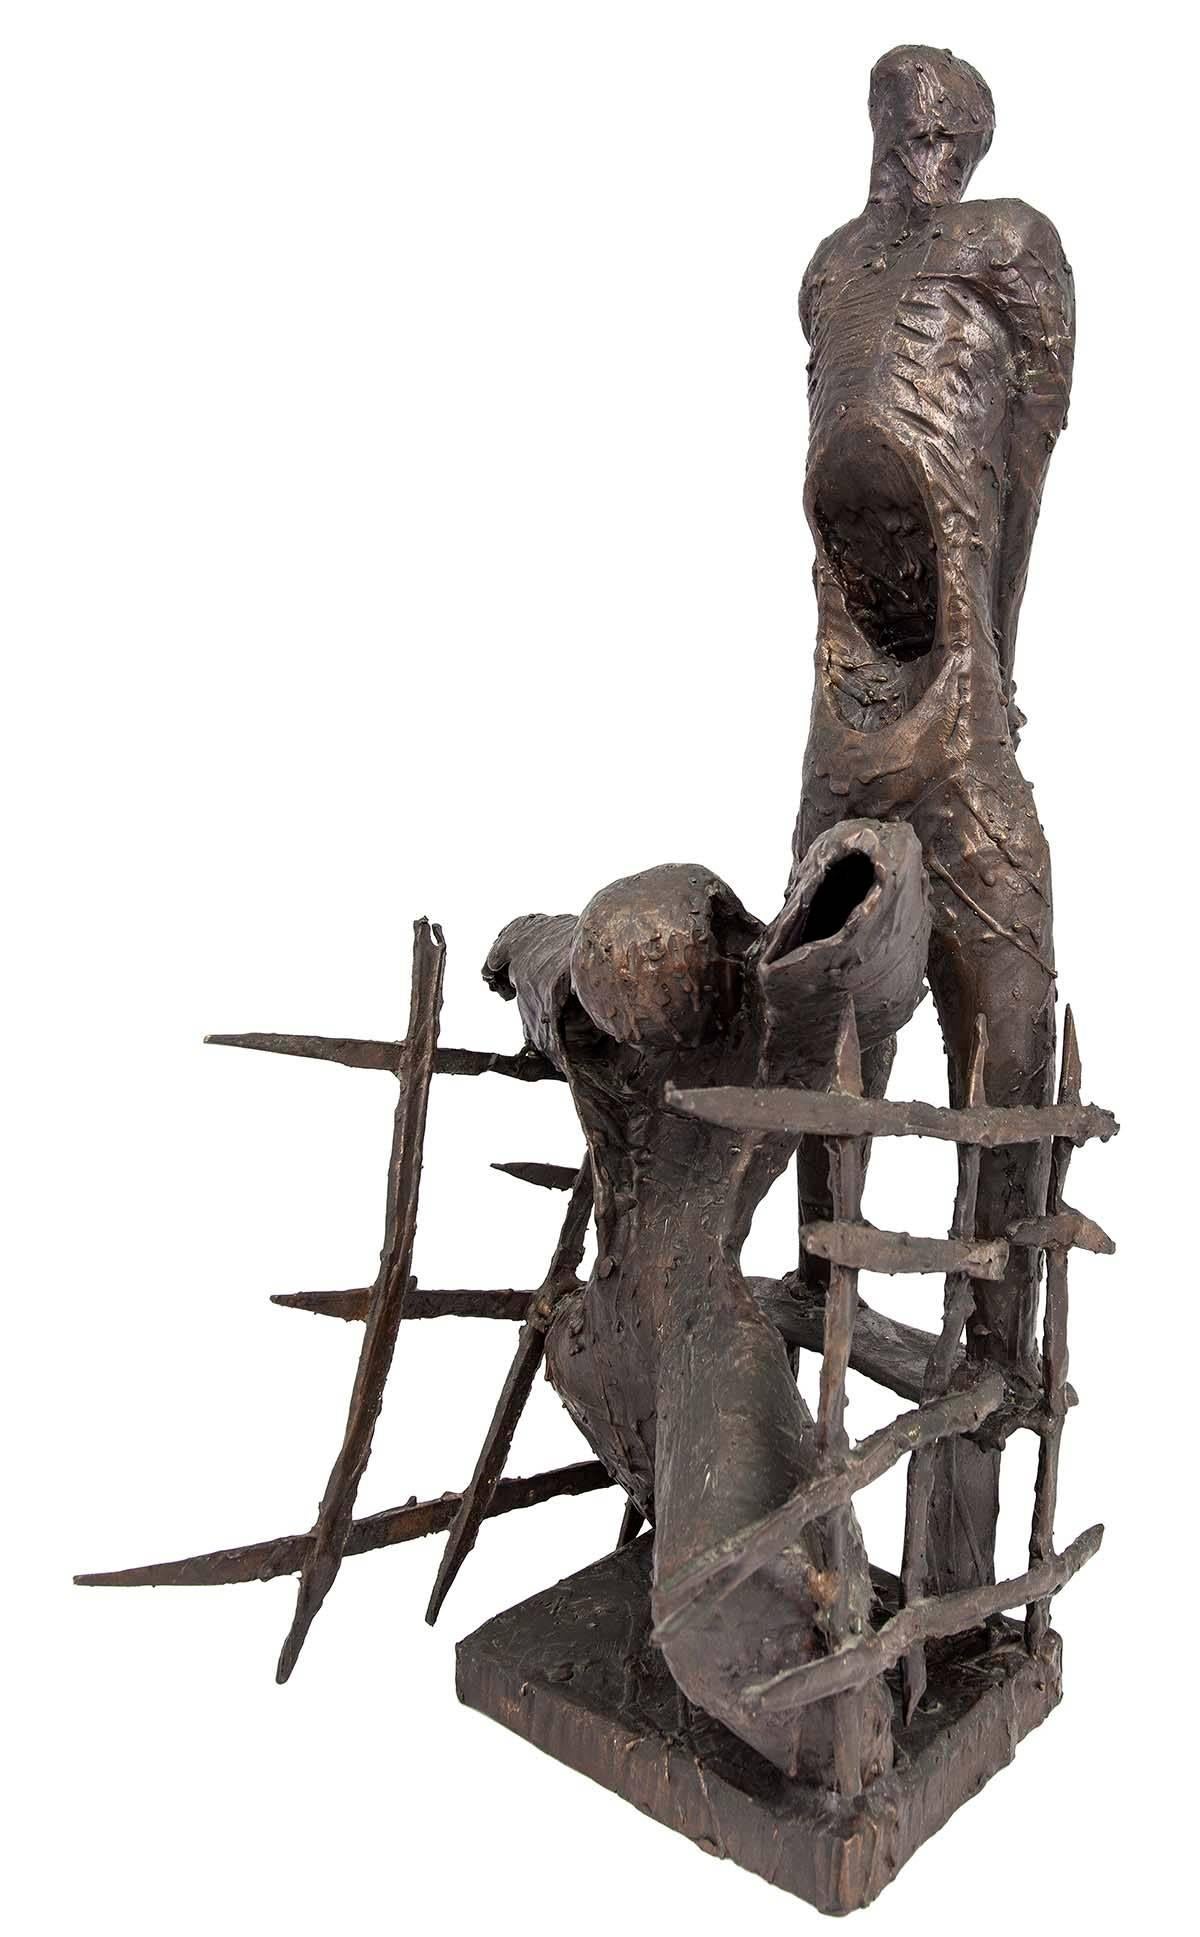 Brutalist Bronze Sculpture, Monument to Oppression, Expressionist Holocaust Art 1